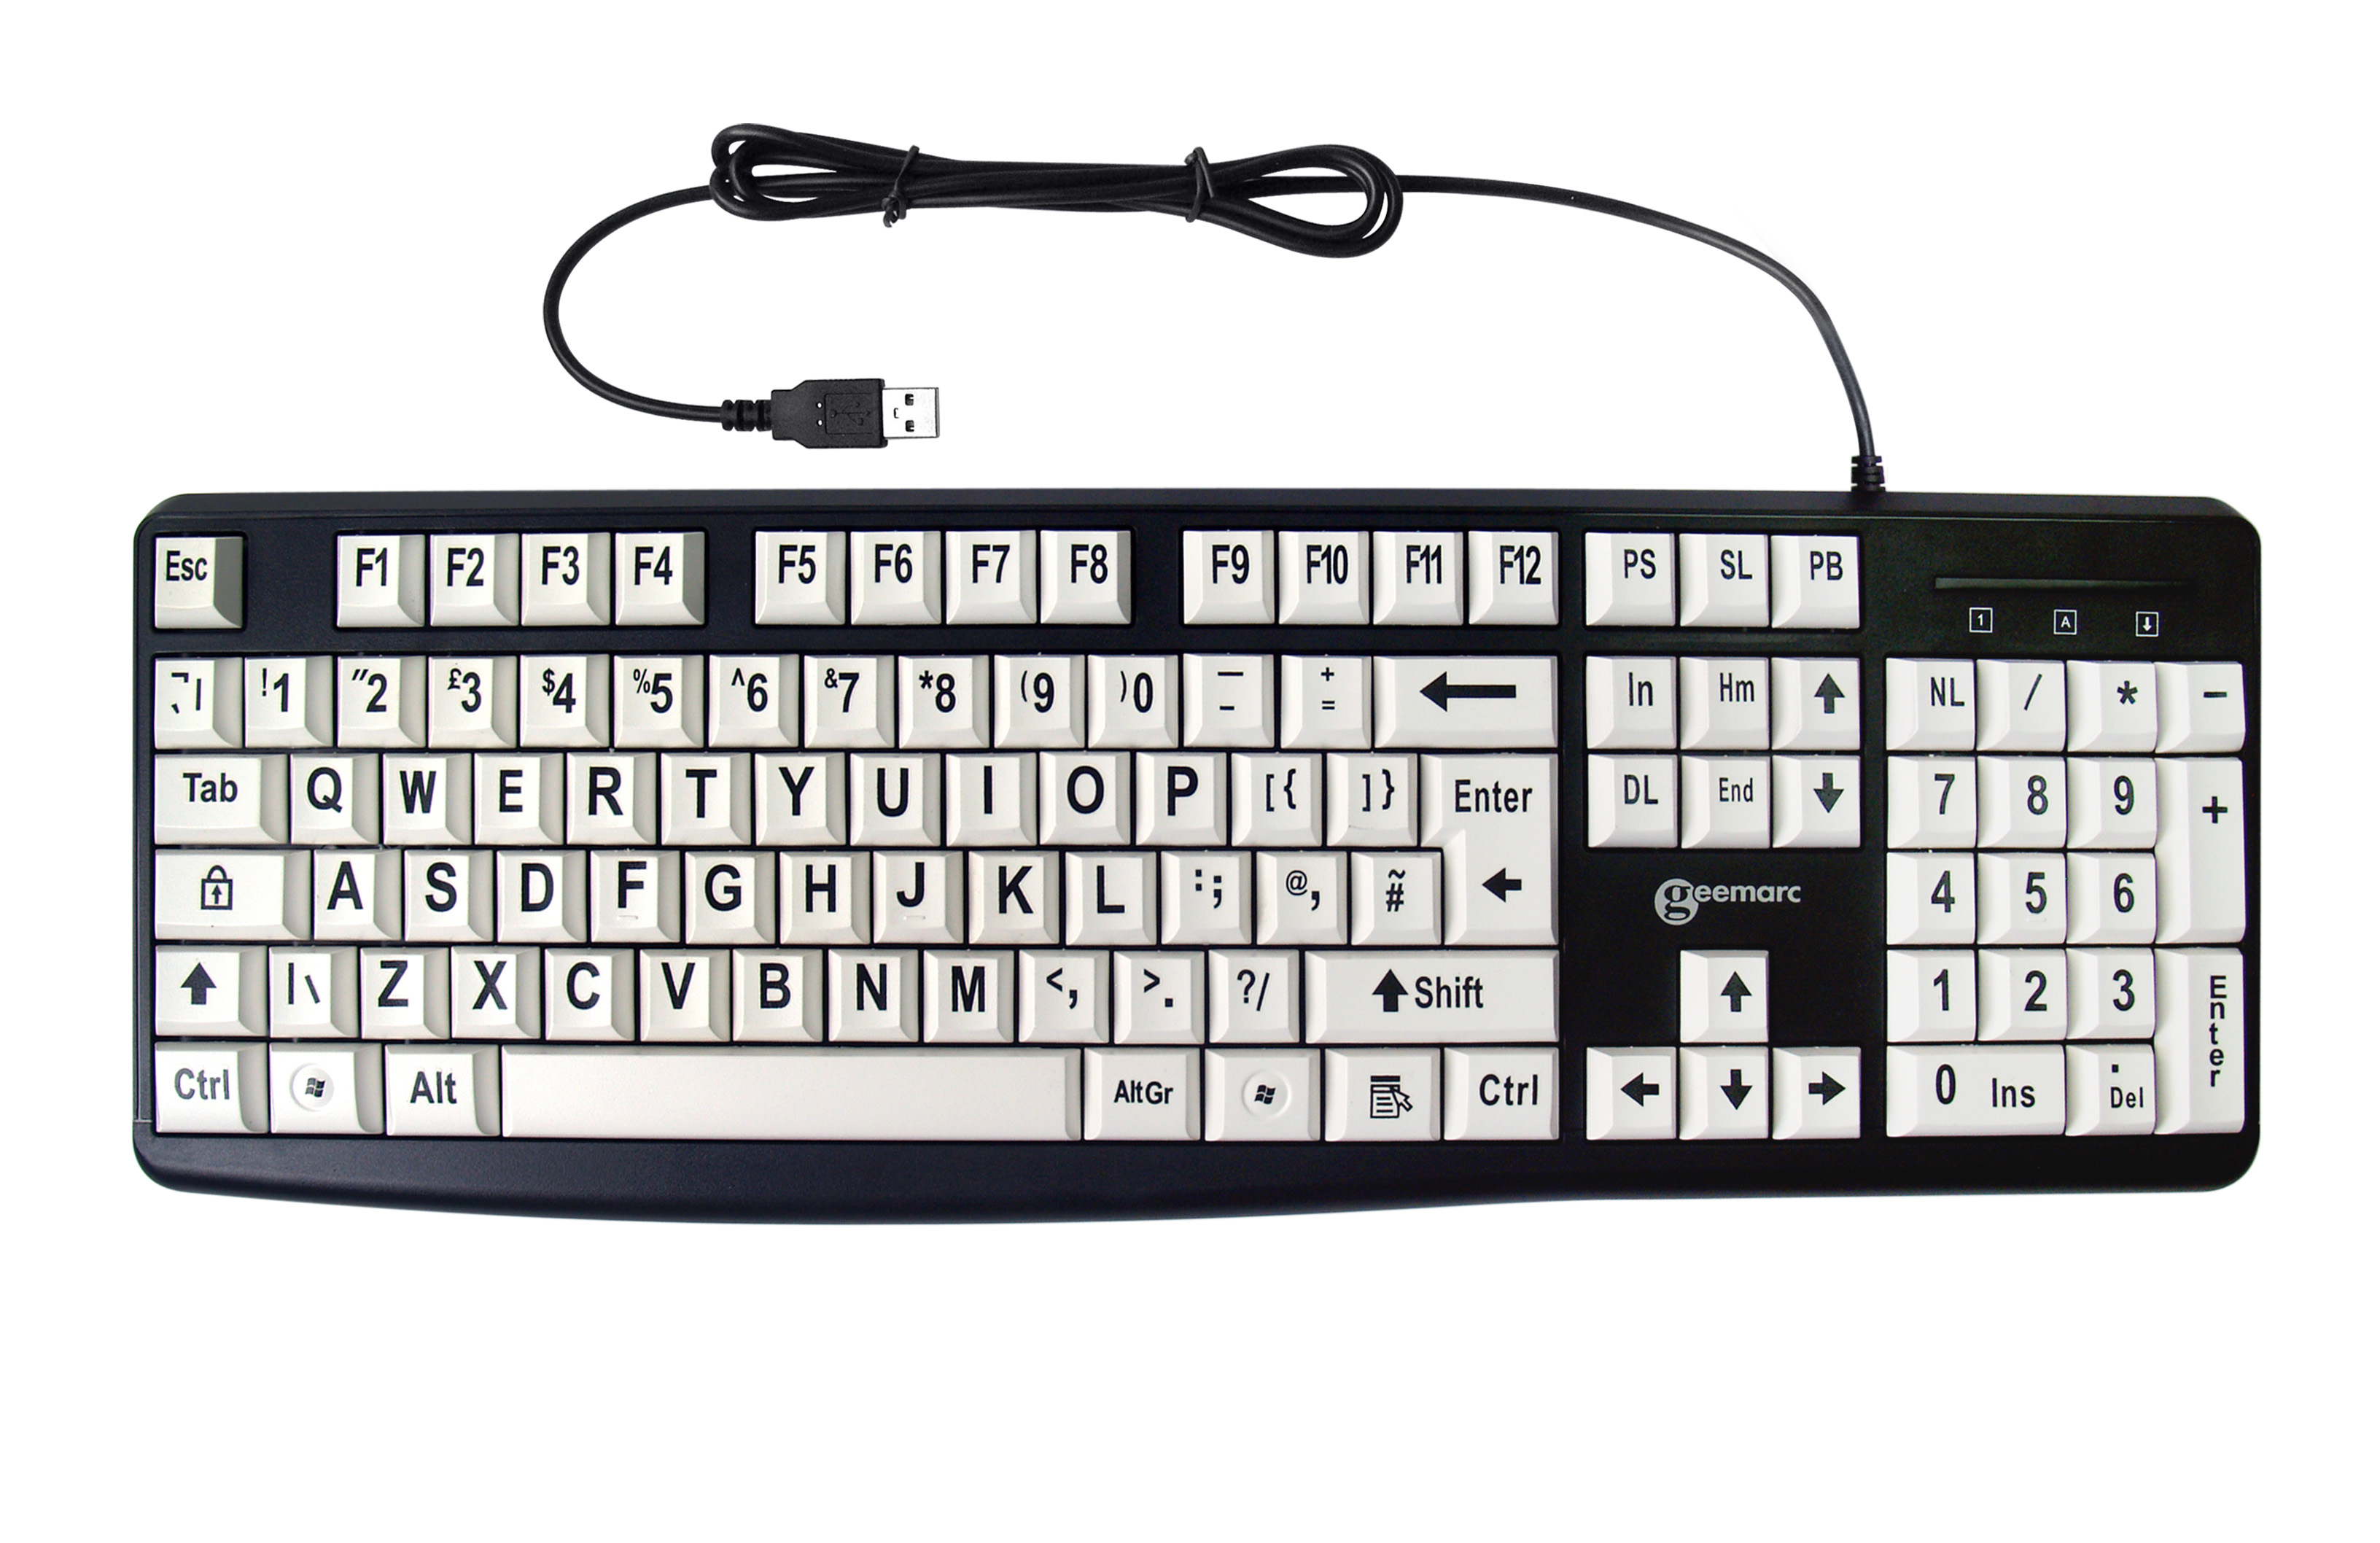 Black keys with large white alpha/numeric keyboard 